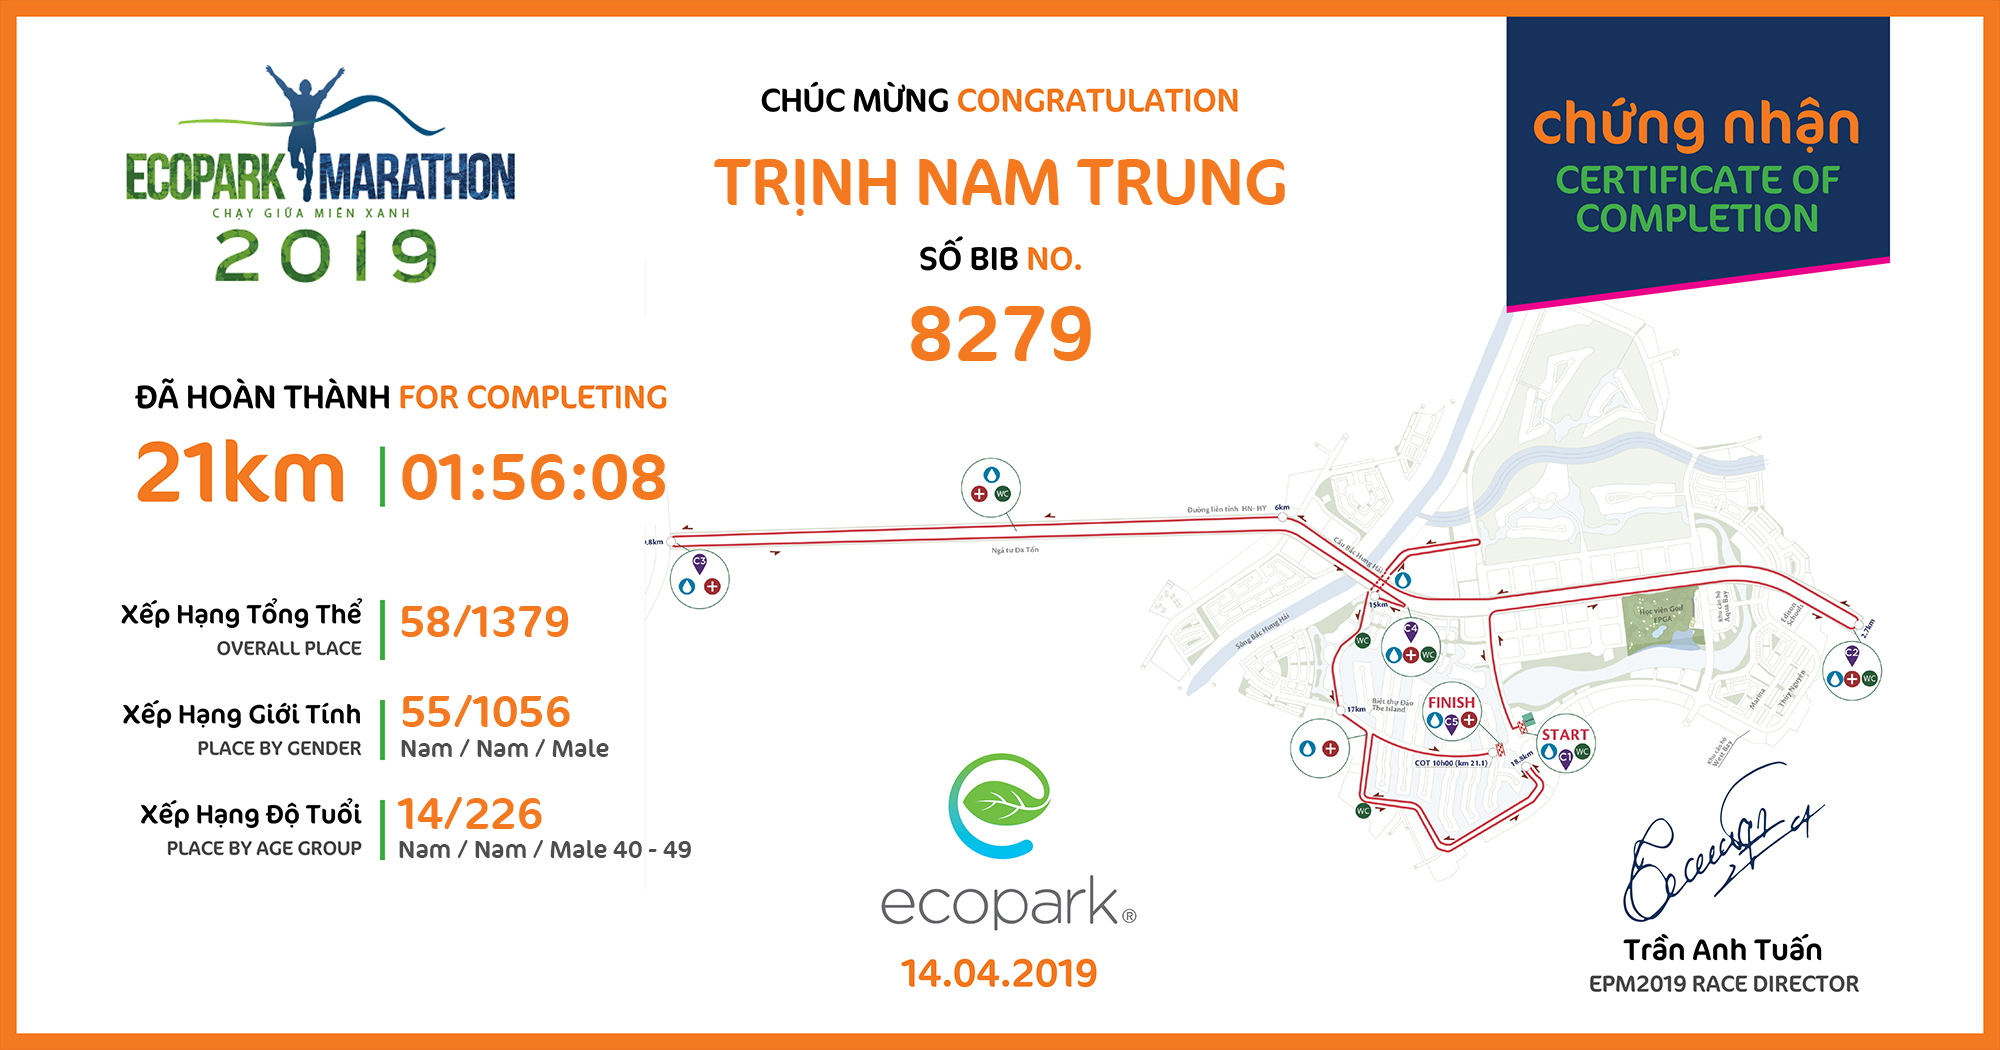 8279 - Trịnh Nam Trung